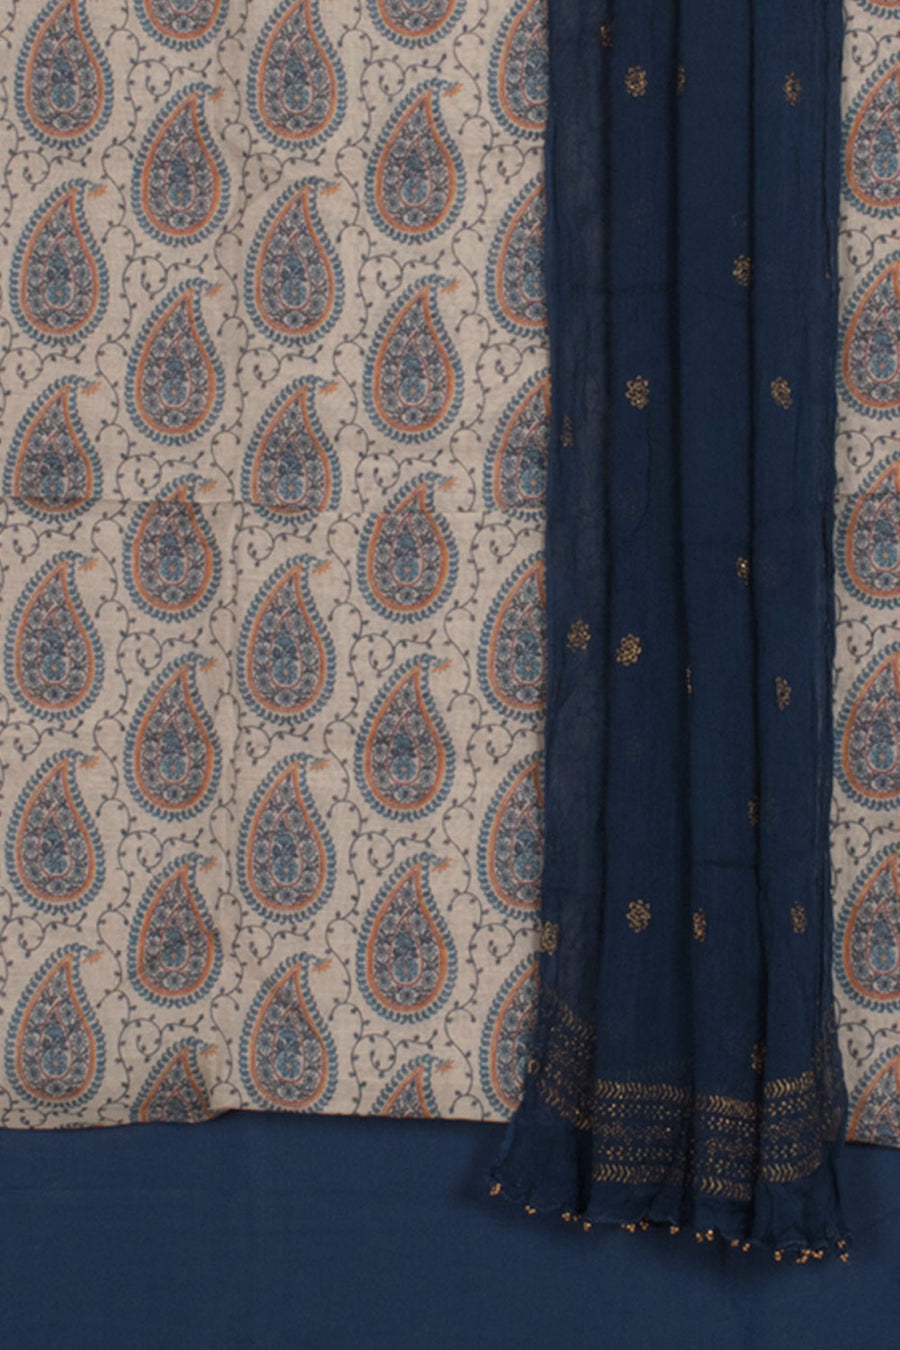 Digital Printed Chanderi Silk Cotton 3-Piece Salwar Suit Material with Mulmul Bottom and Rogan Printed Dupatta 